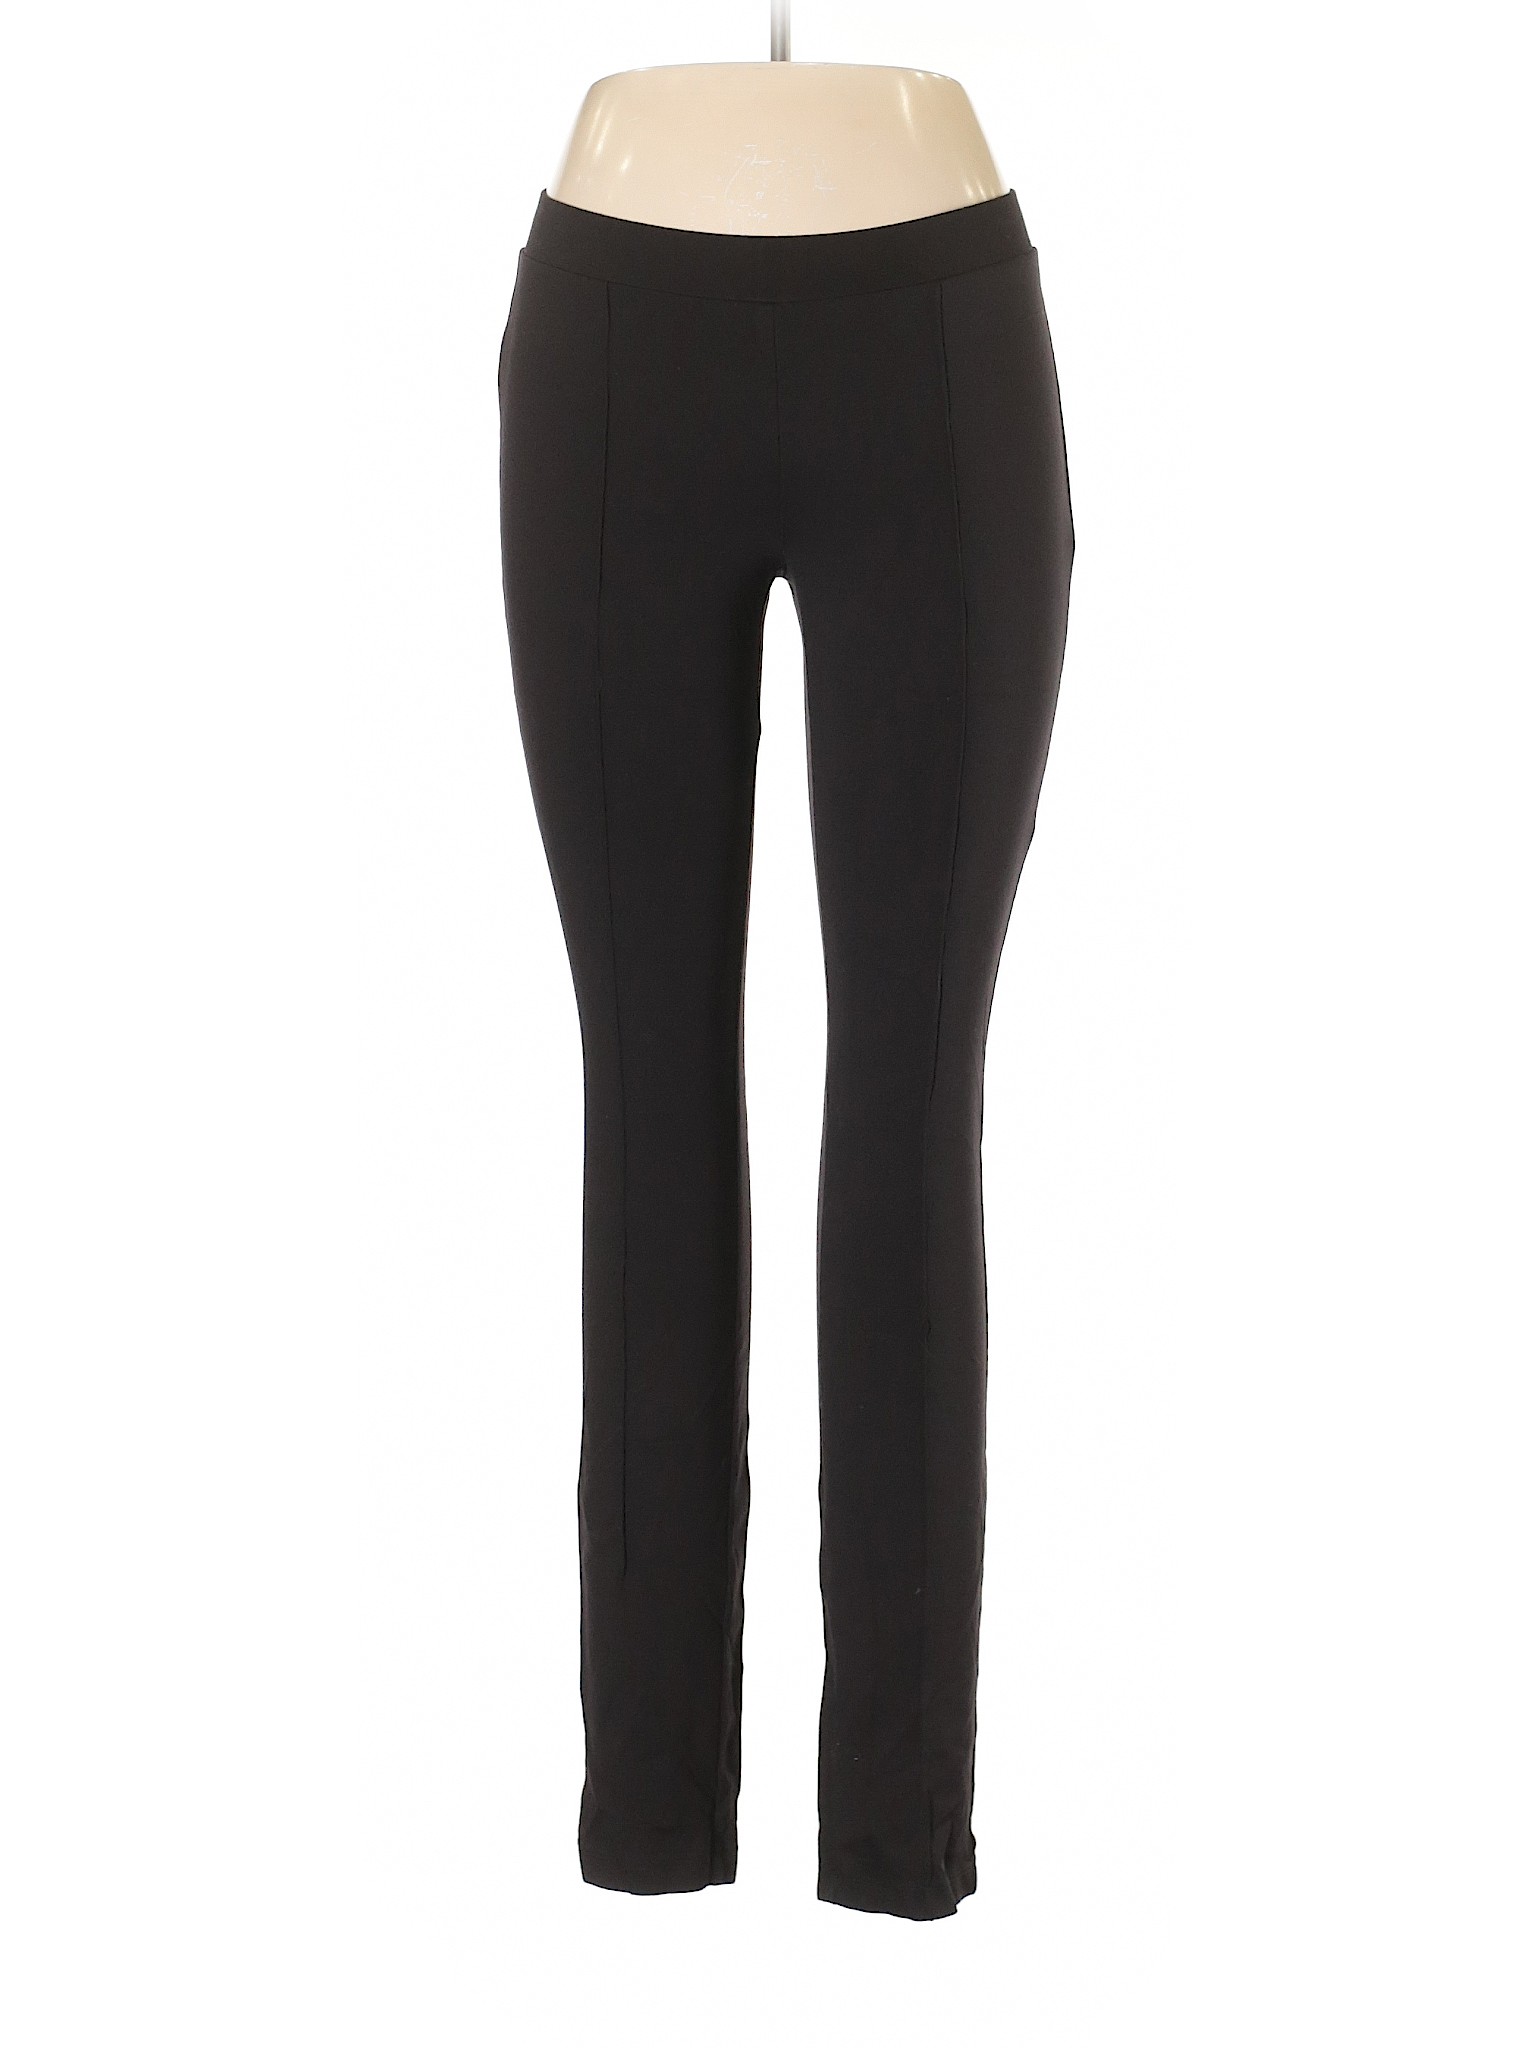 Calzedonia Women Black Casual Pants L | eBay